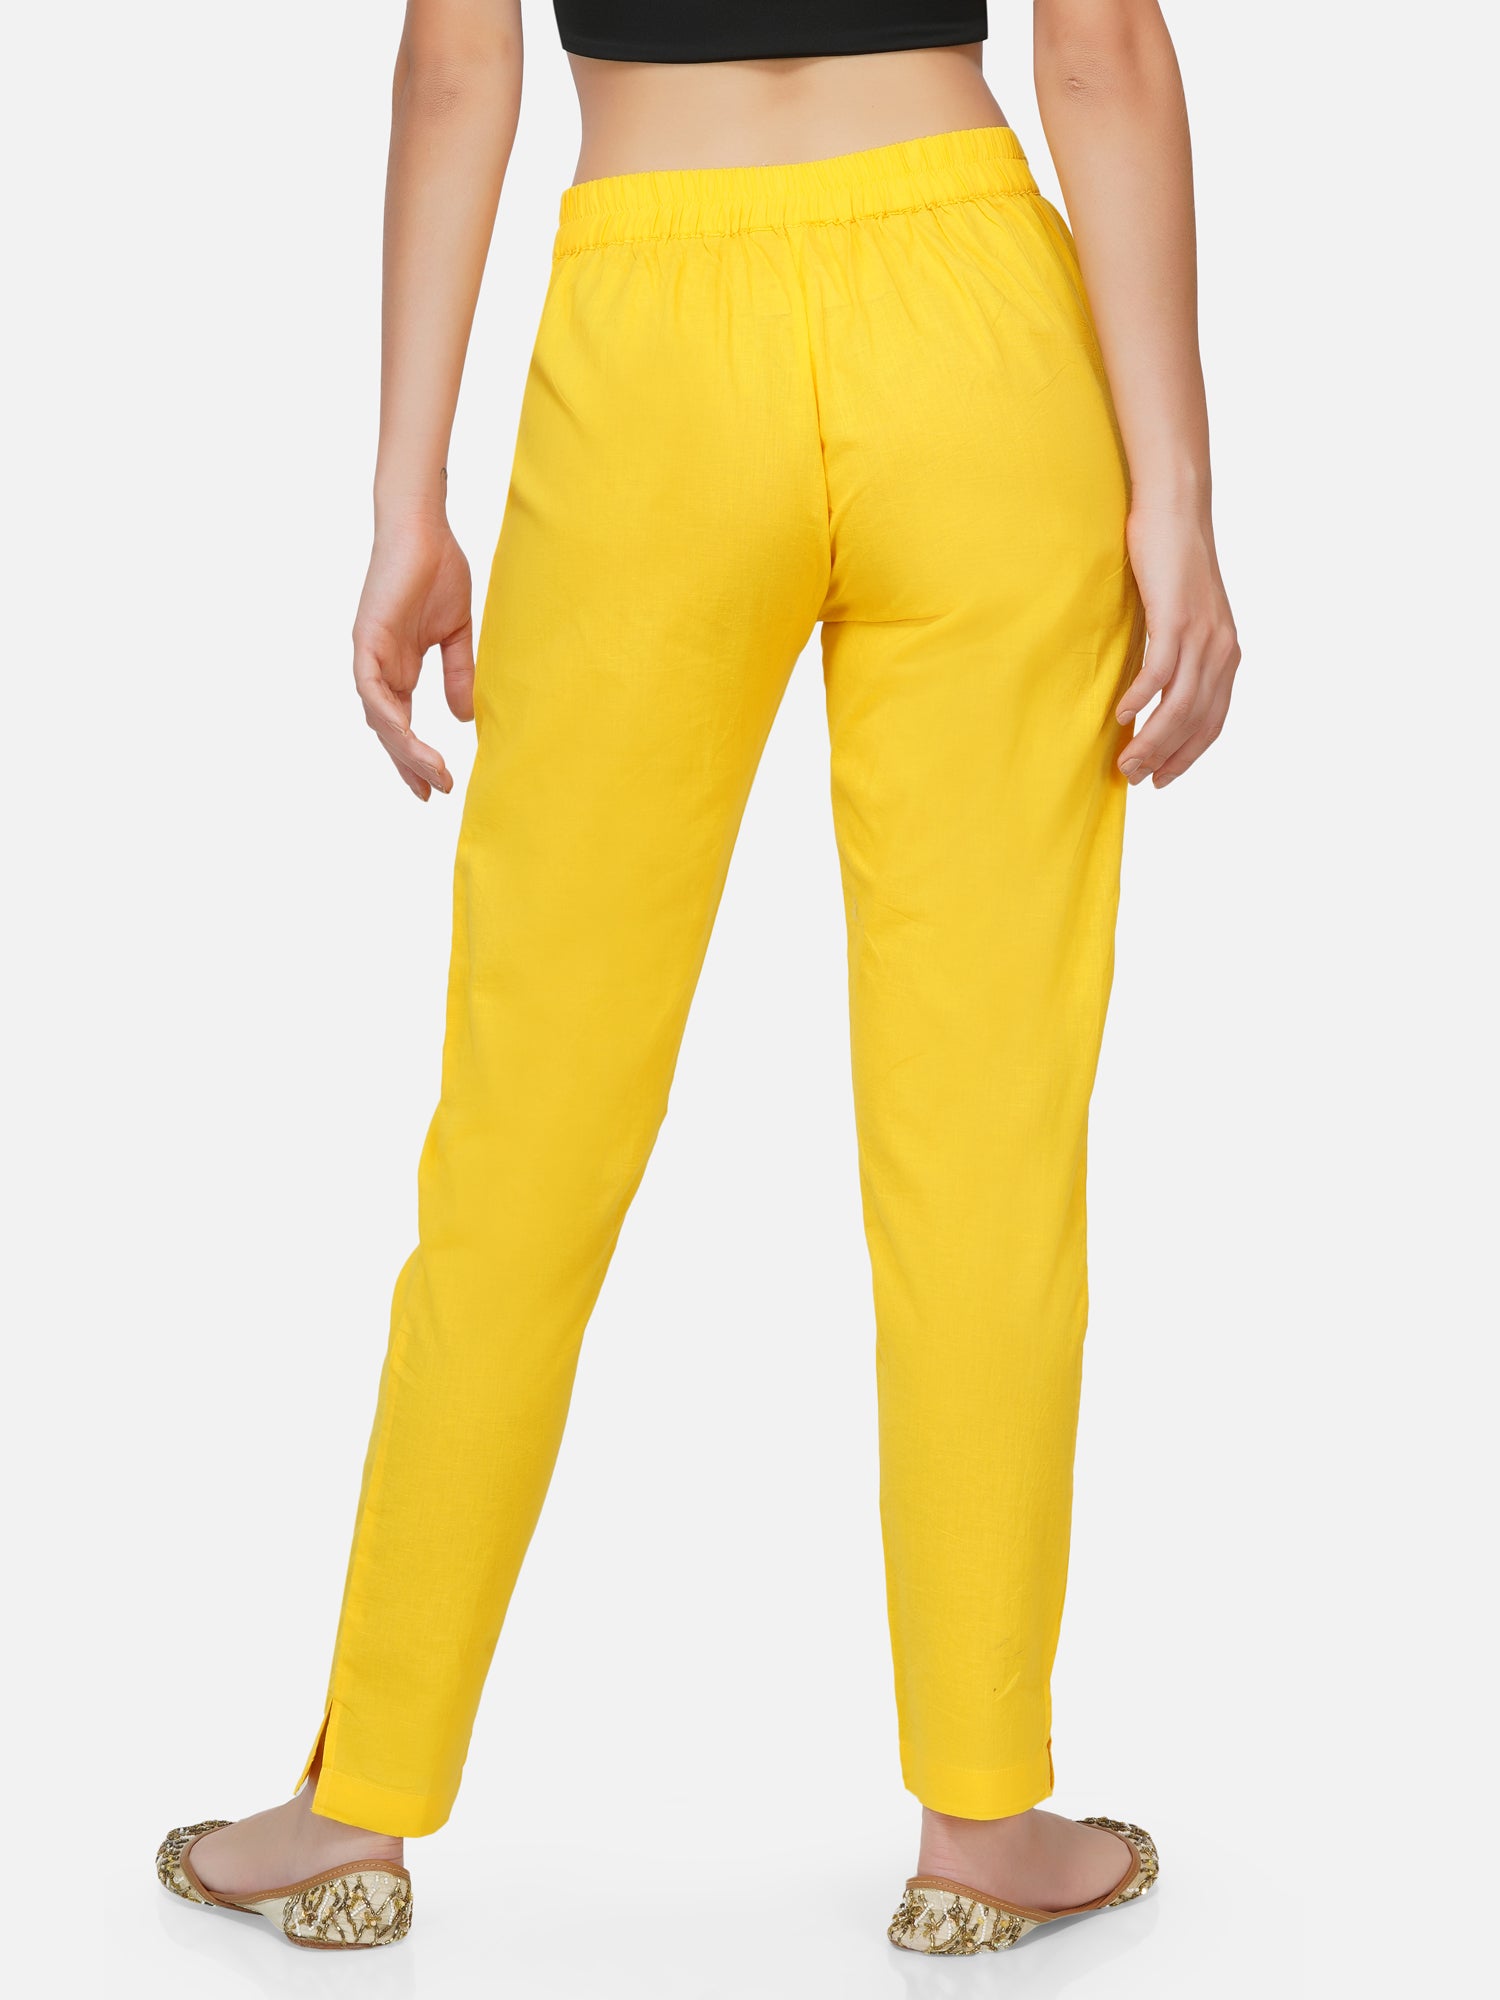 Buy RAJESHBHAI GHANSHYAMBHAI VAGHANI Womens Straight Fit Mustard Yellow  Pants XL at Amazonin